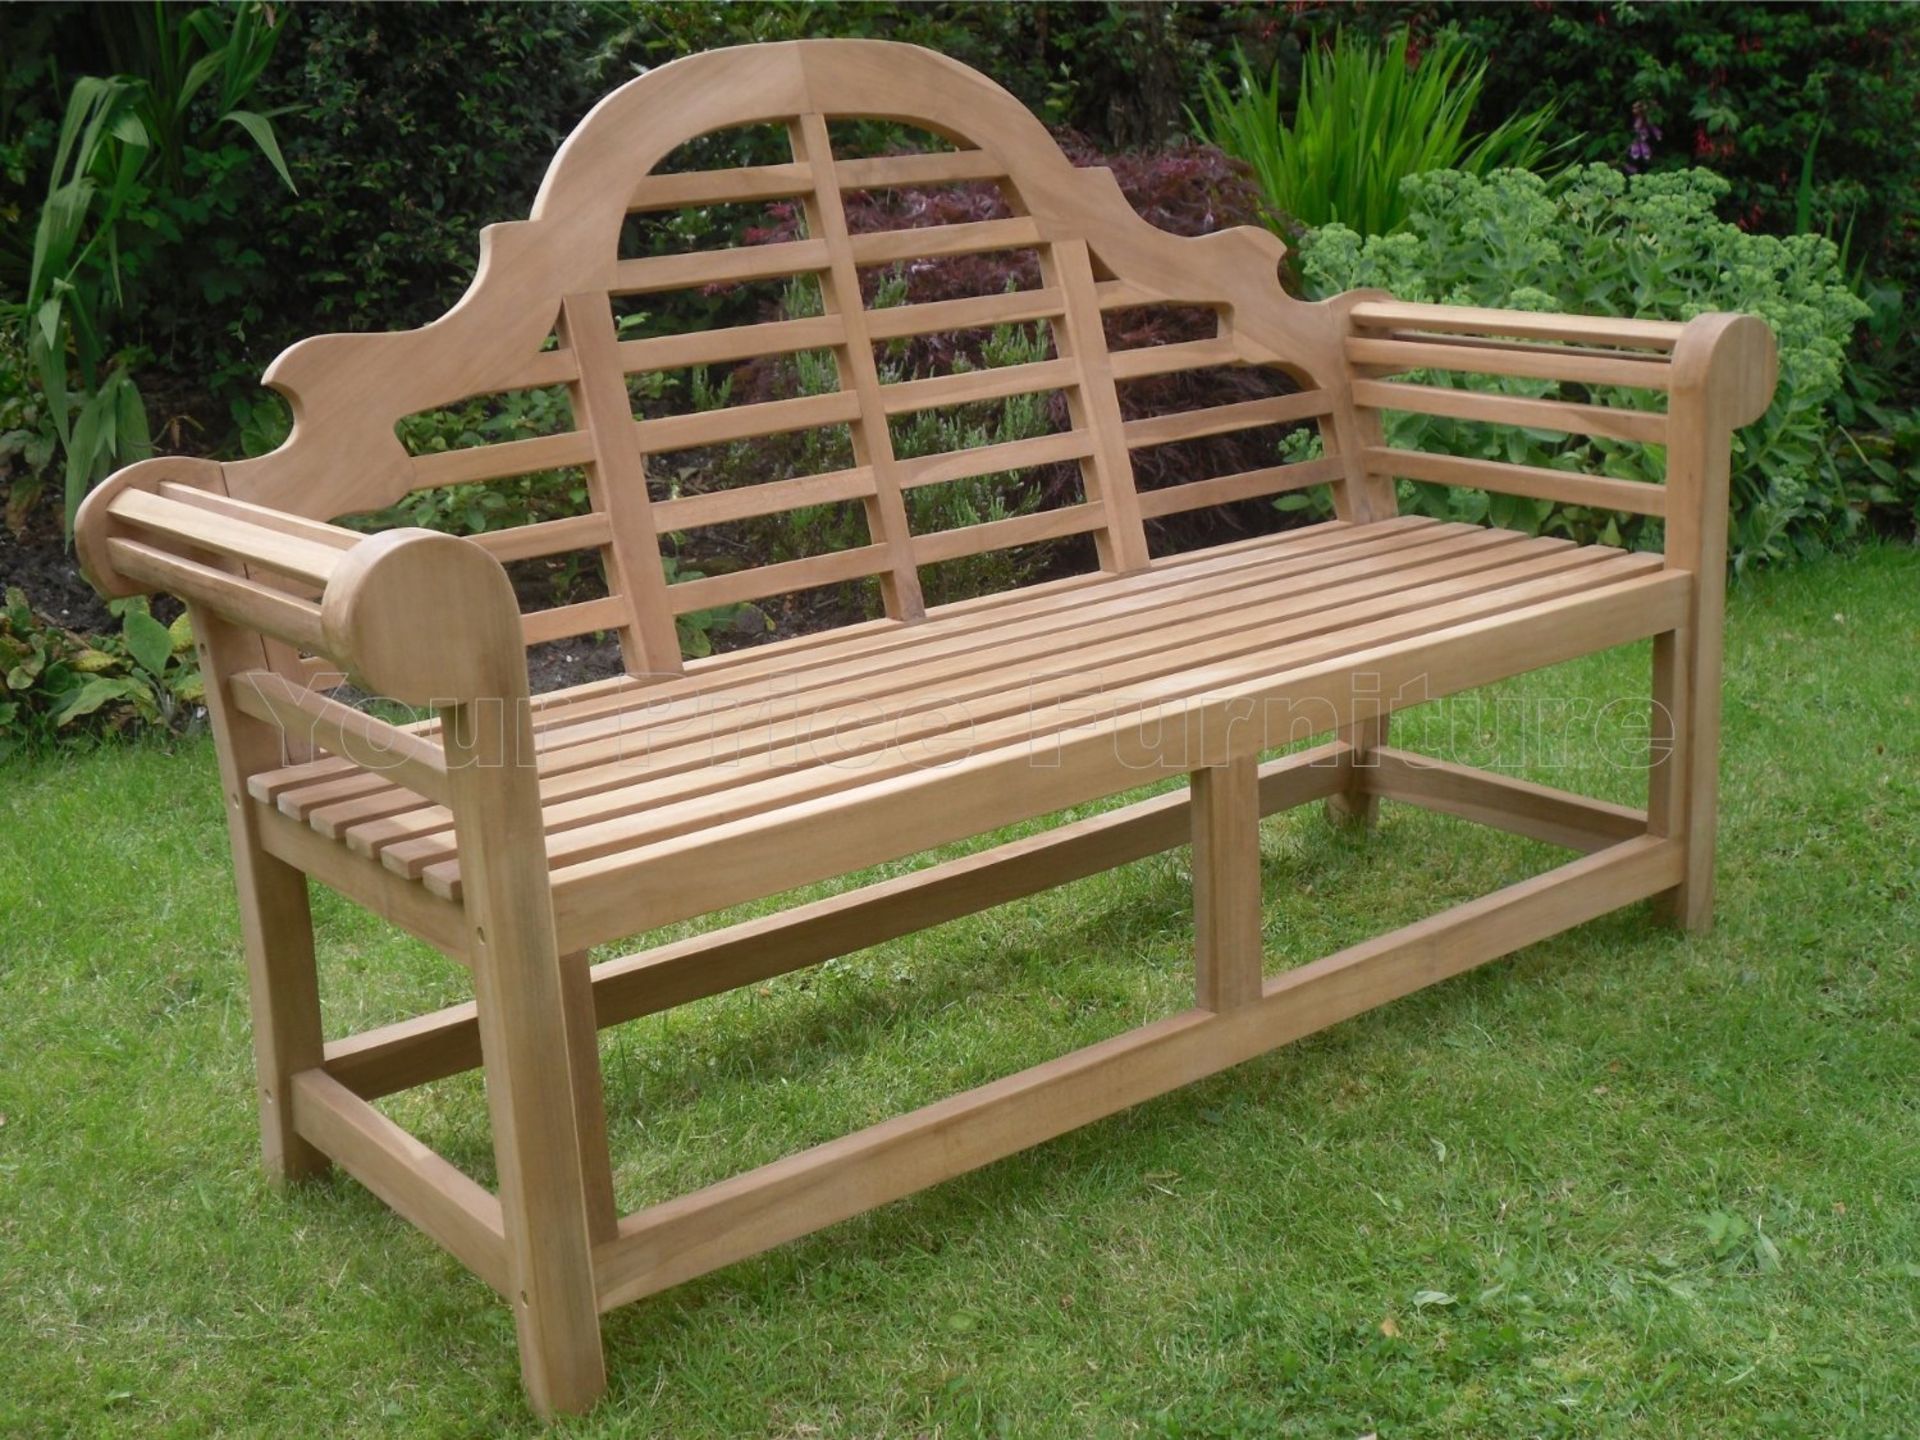 Marlborough Teak 150cms 5ft Lutyens Style Garden Bench For Your Patio RRP £199.99/